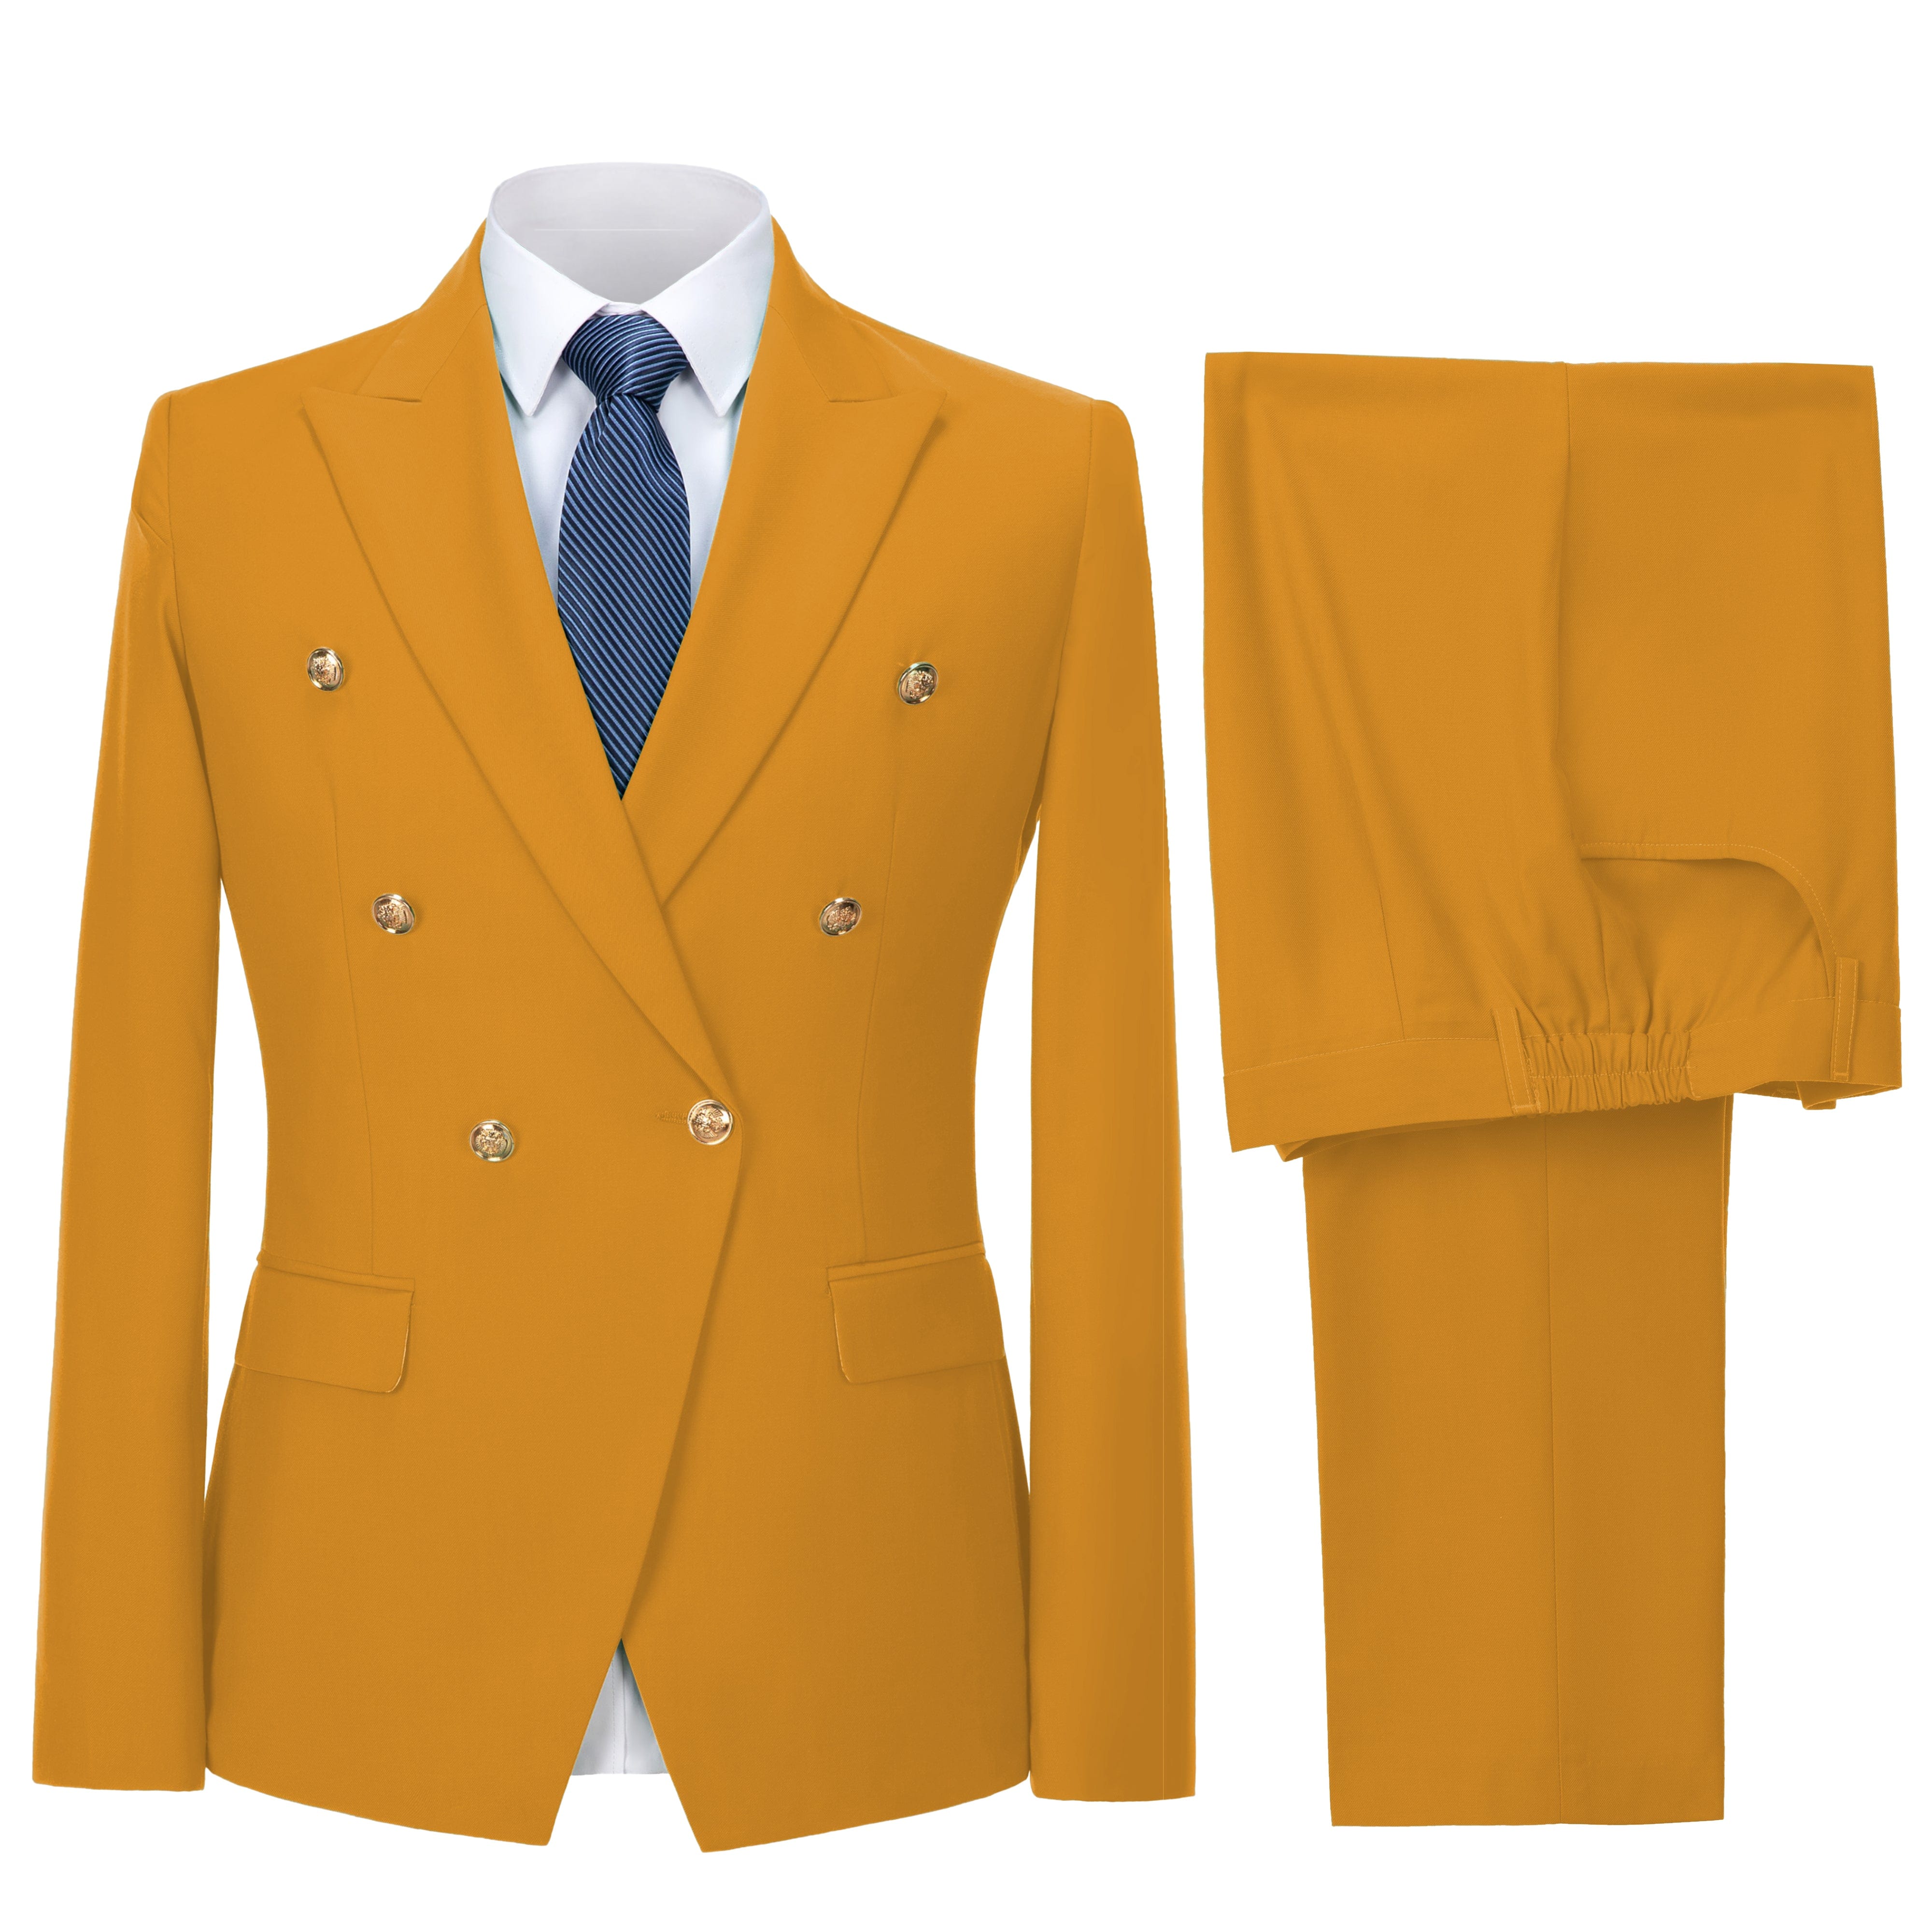 ceehuteey Men's 2 pieces Suit Slim Fit Flat Double Breasted Peak Lapel Tuxedos for Wedding (Blazer+Pants)